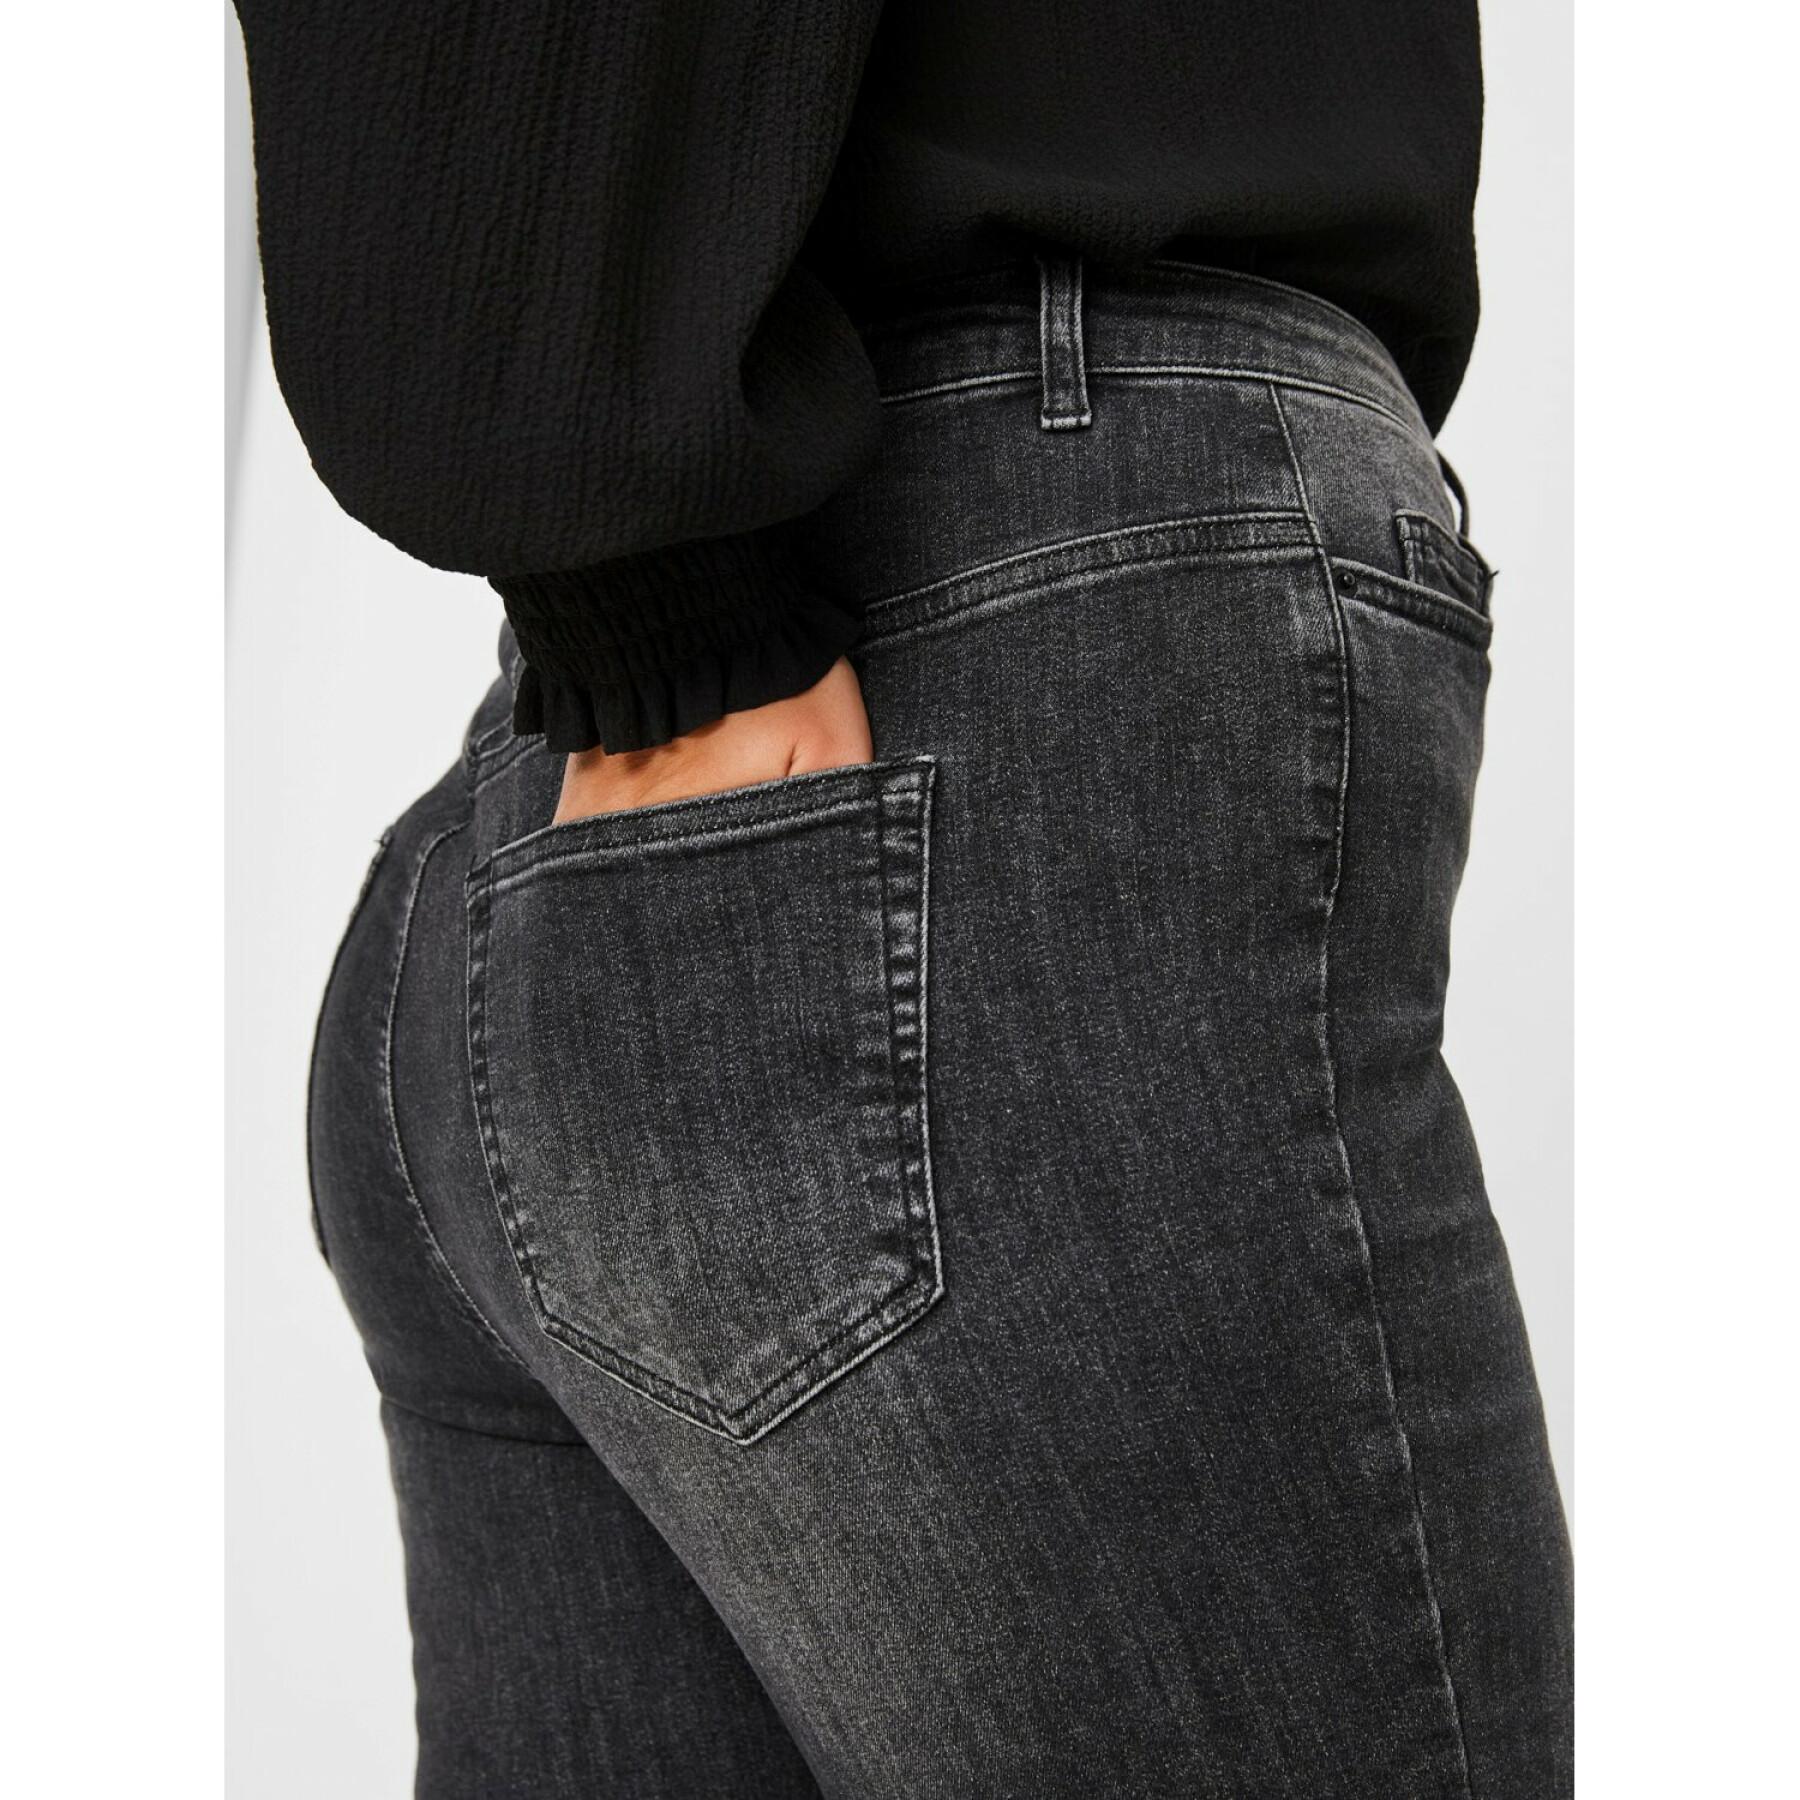 Women's jeans Vero Moda vmlora